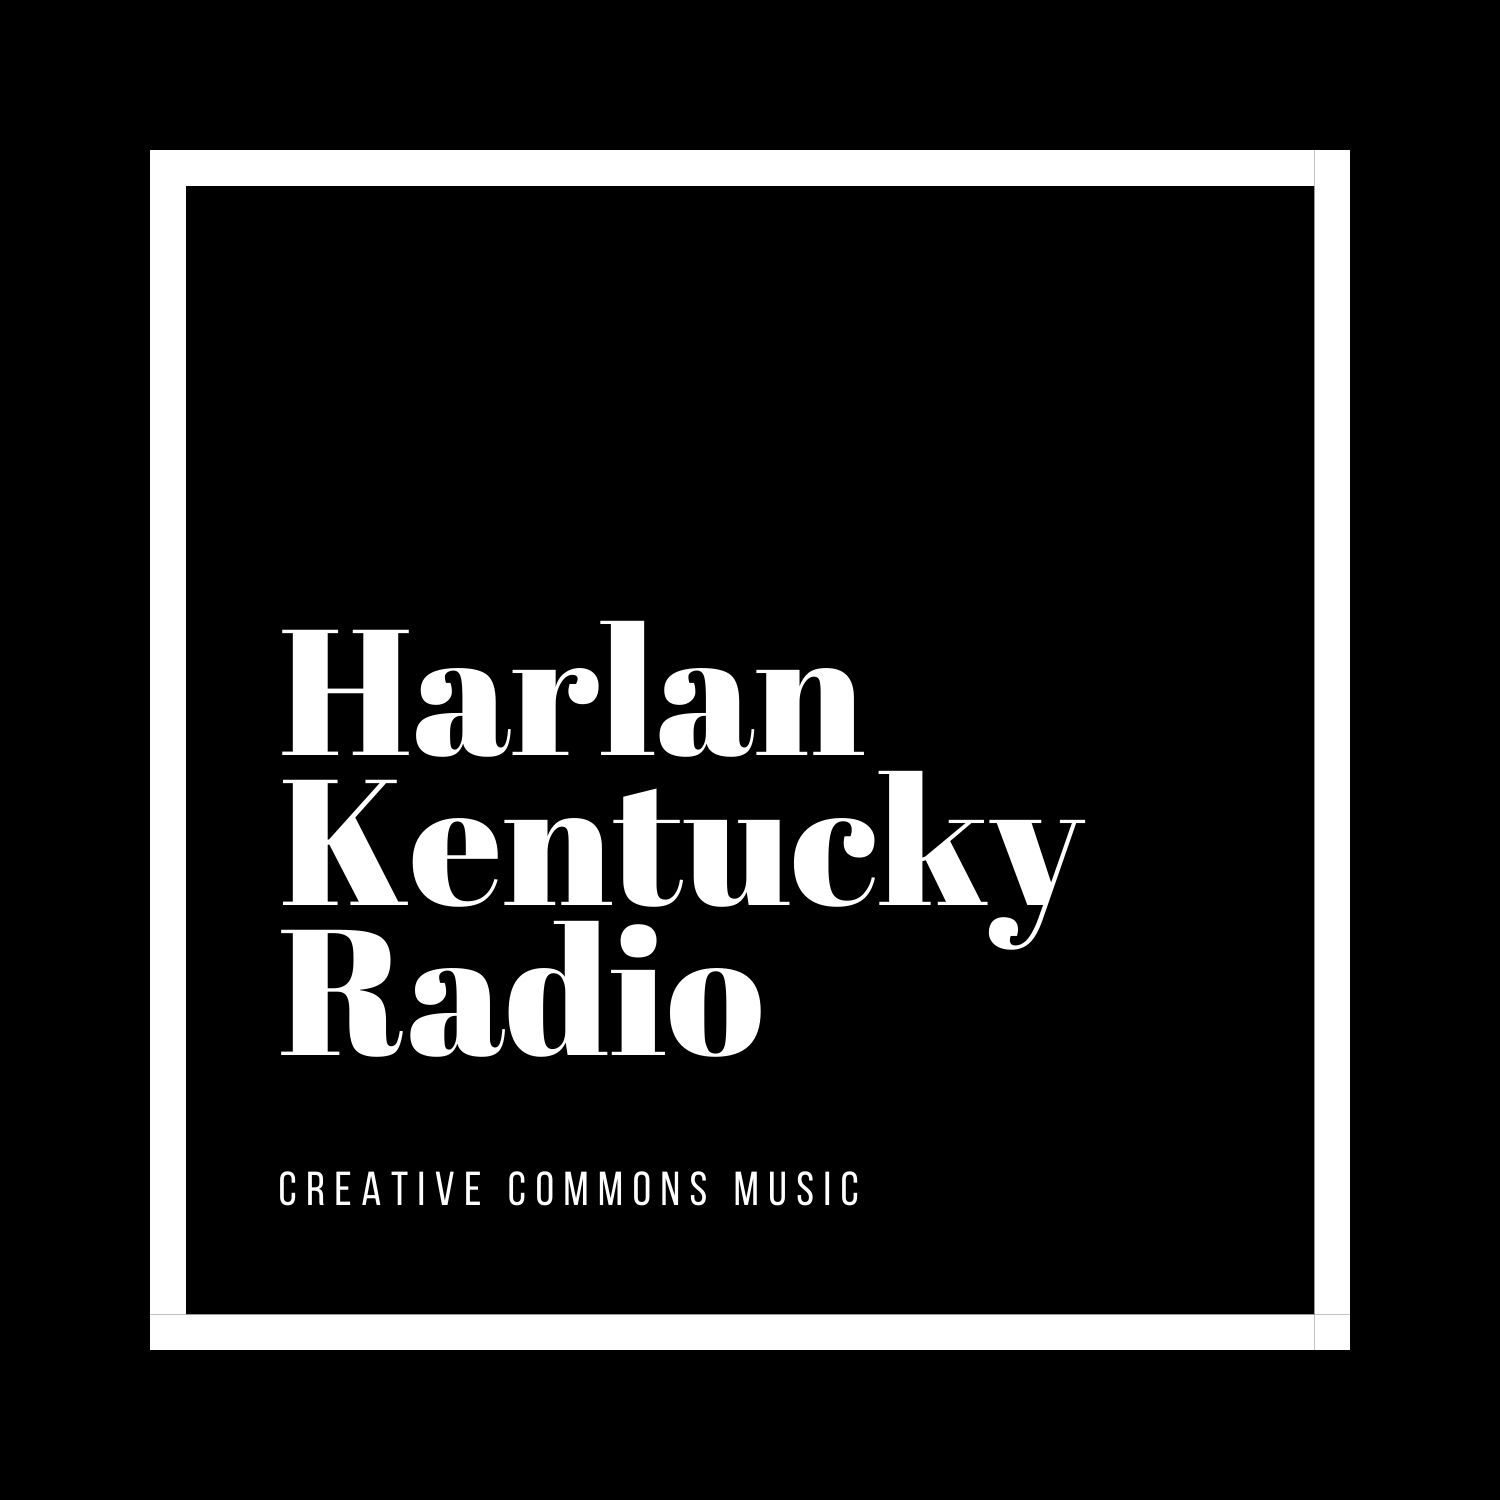 Harlan Kentucky Jazz and Blues Radio